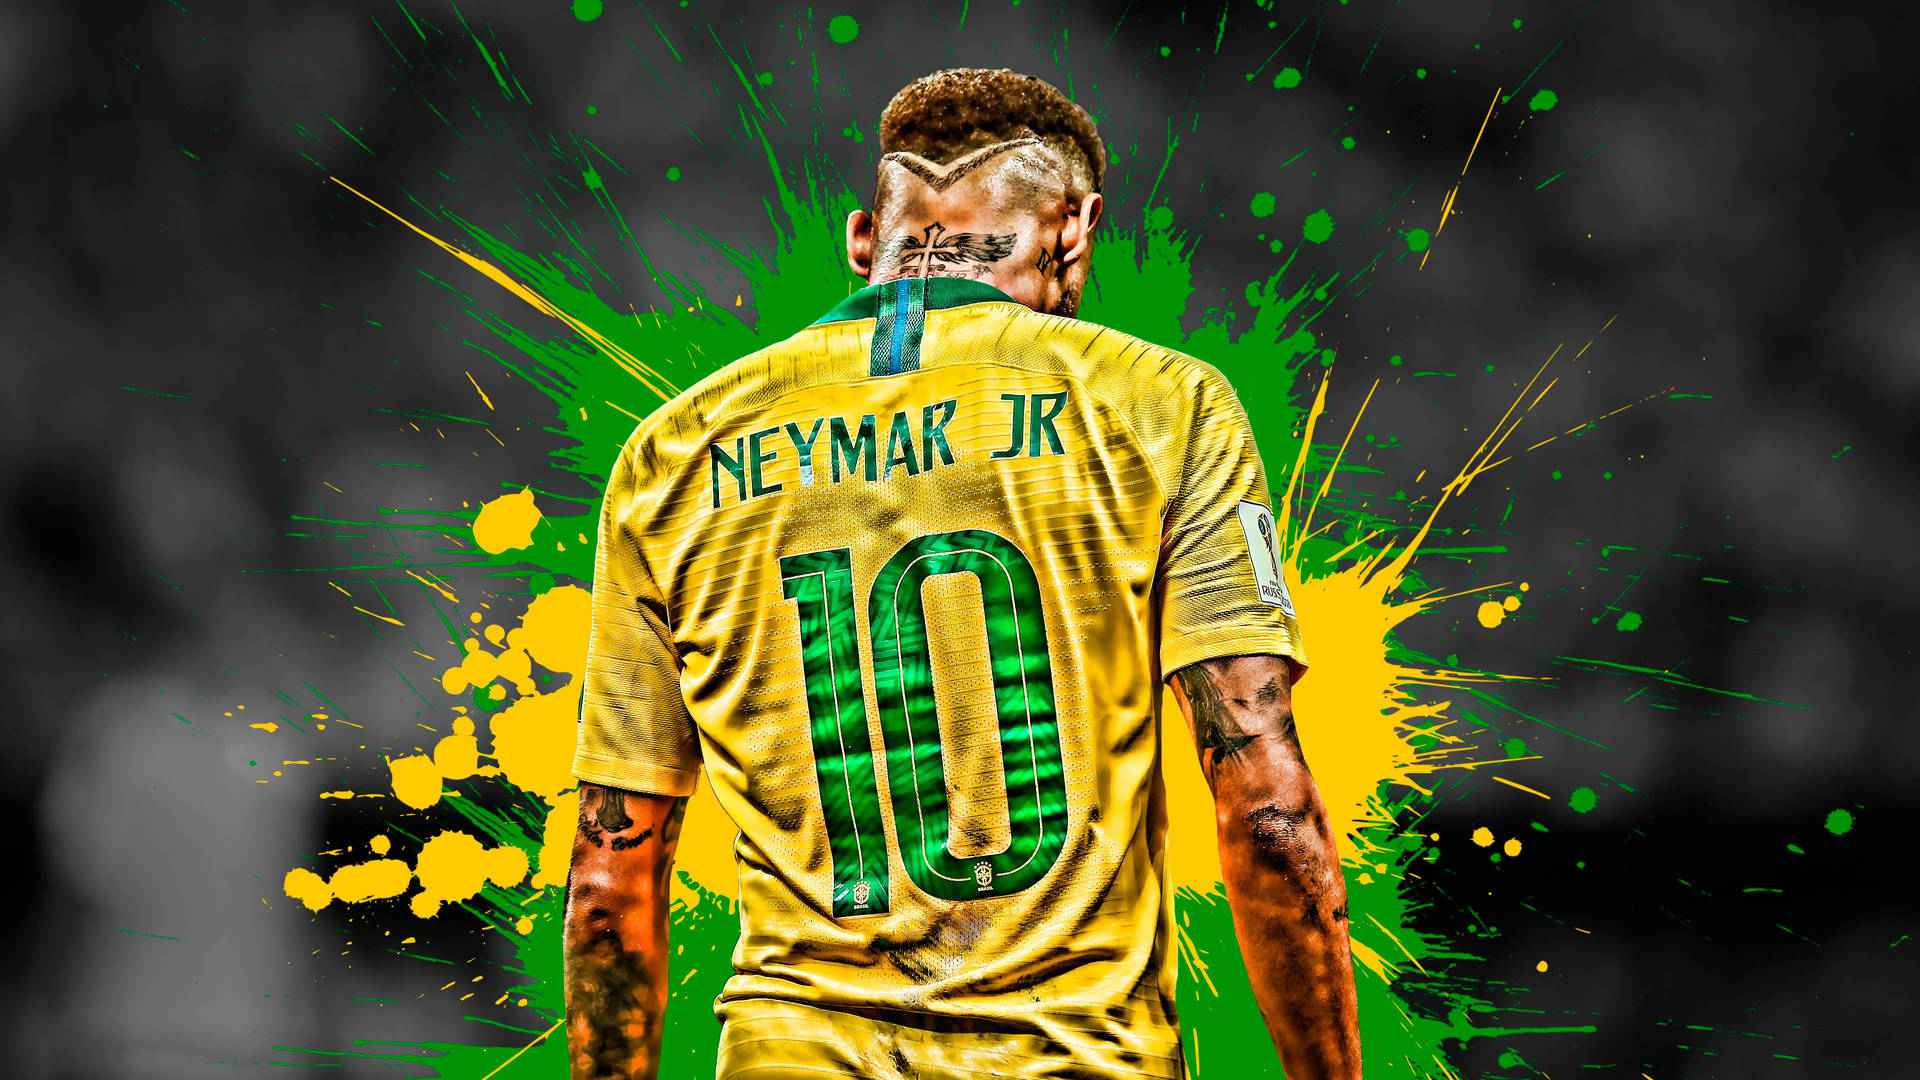 Vibrant 4k Image Of Neymar Jr. With A Splashed Paint Background